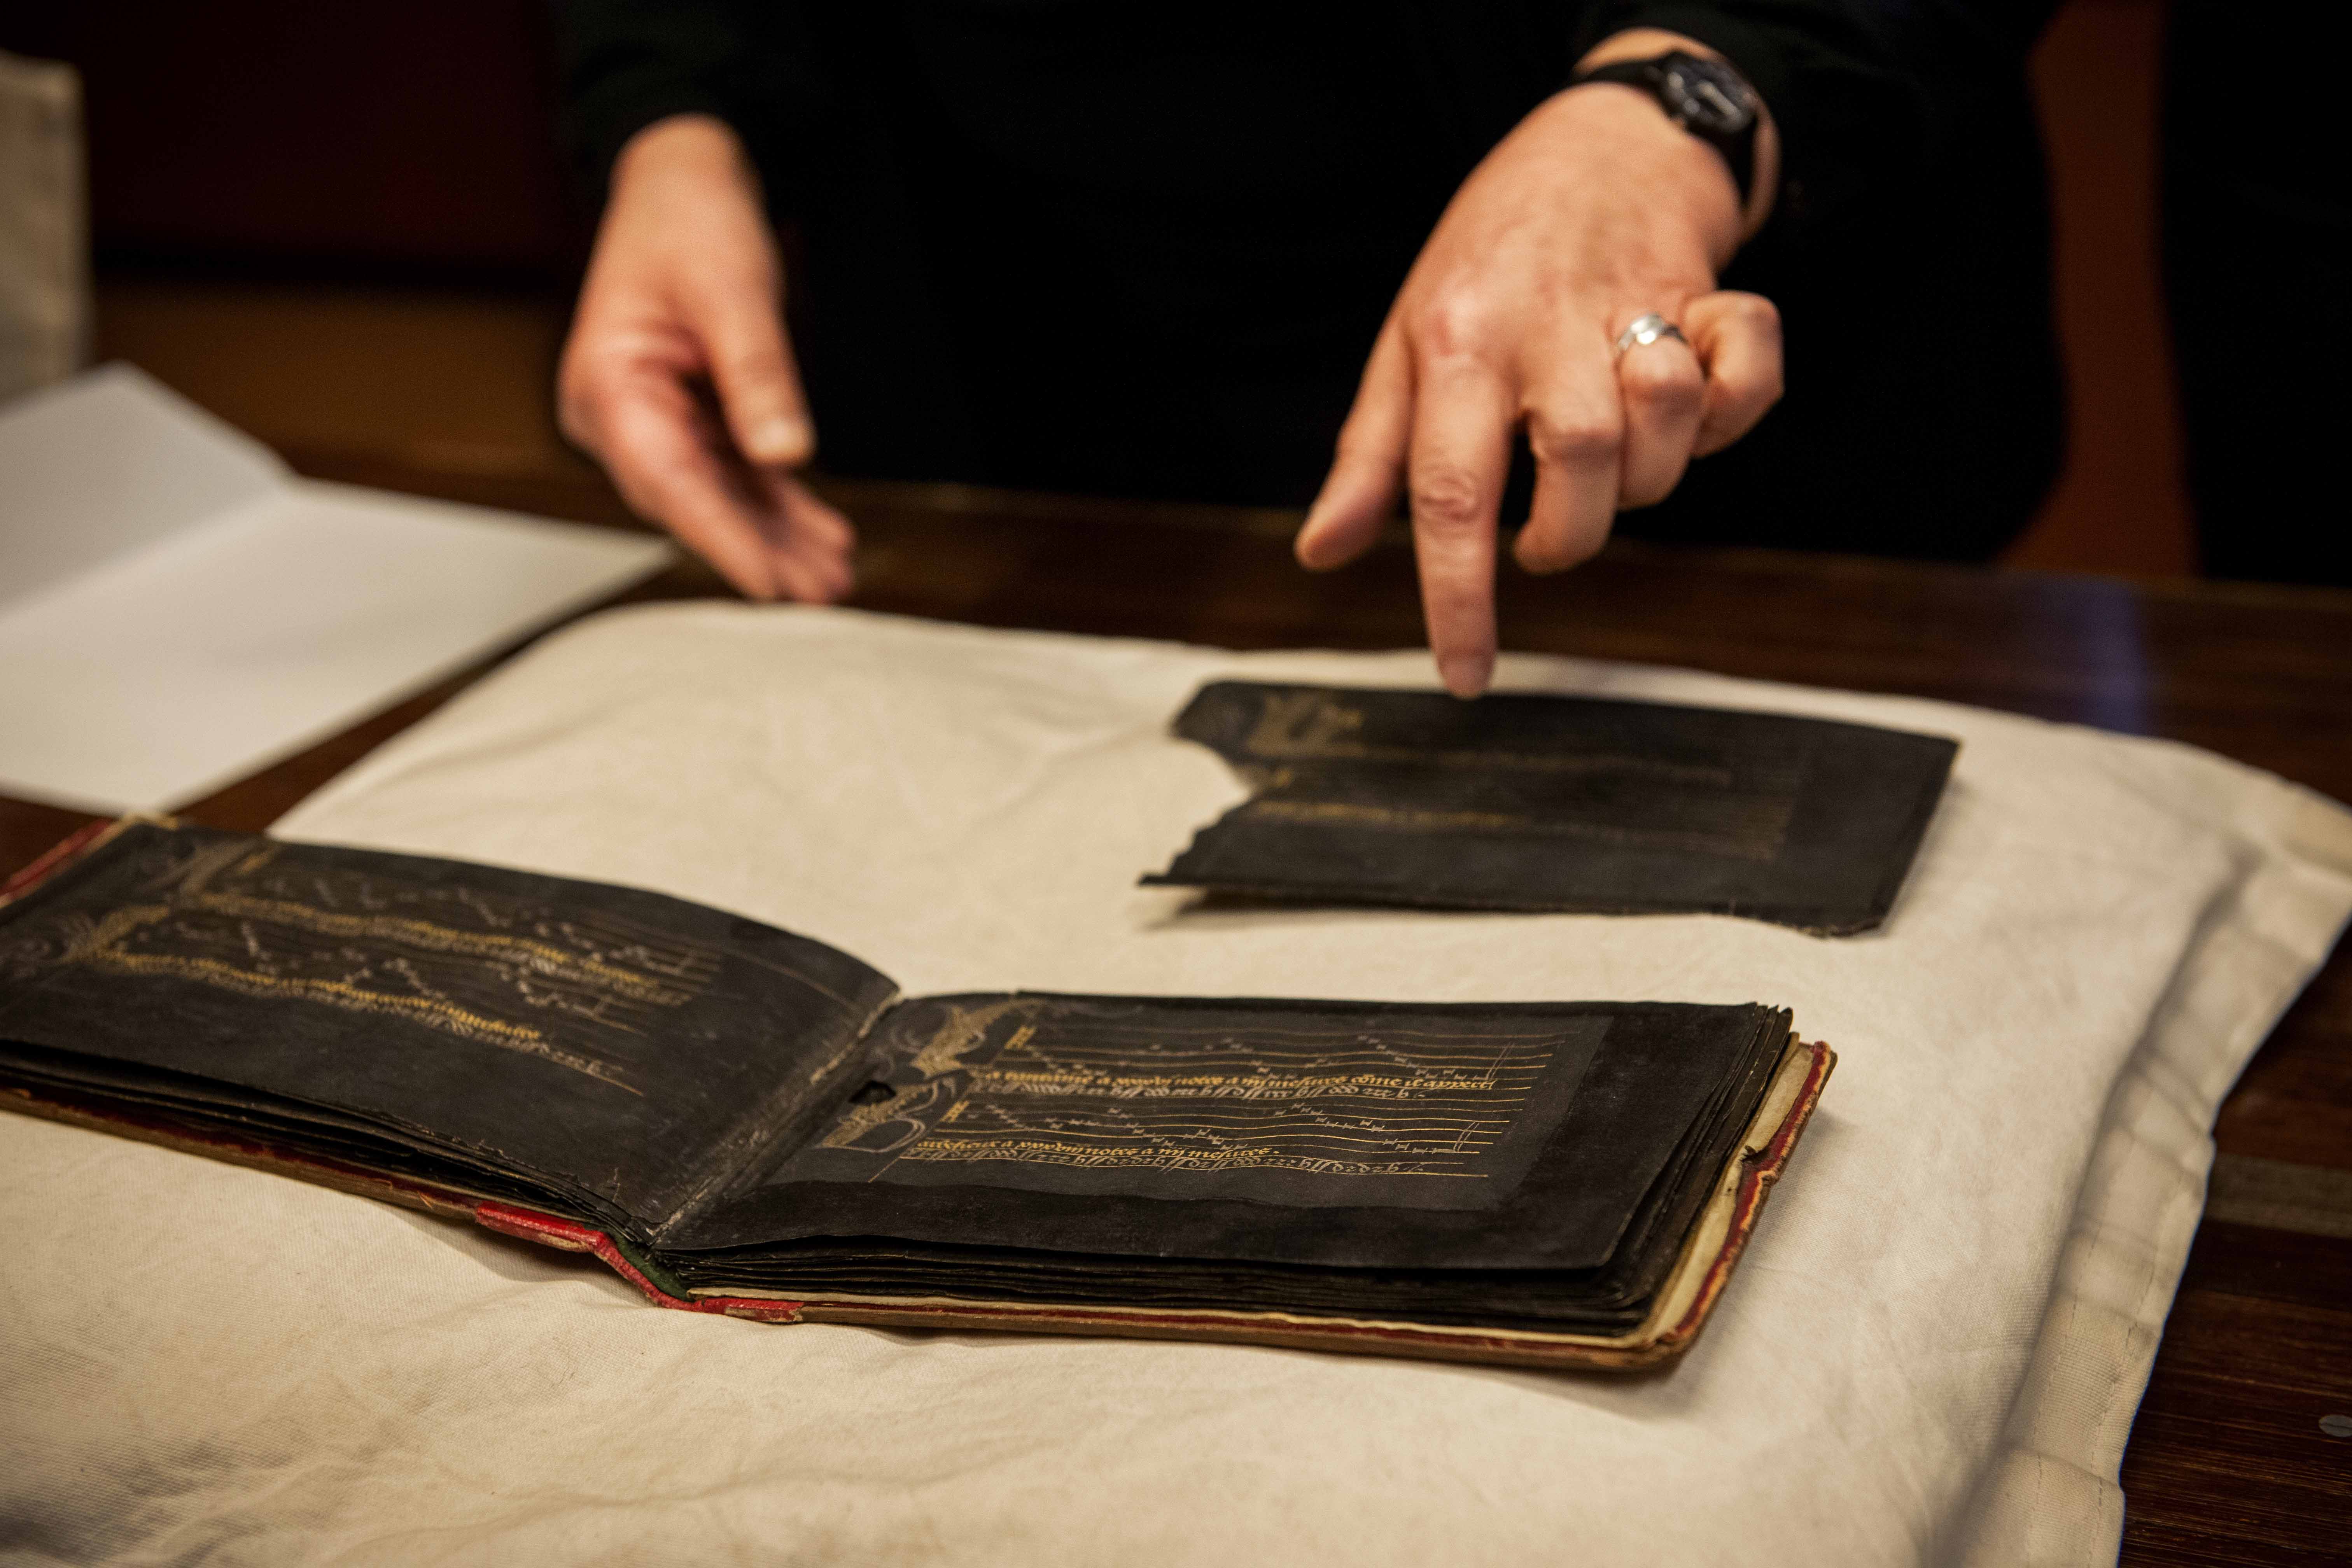 Unseen: a “black” manuscript at the KBR museum